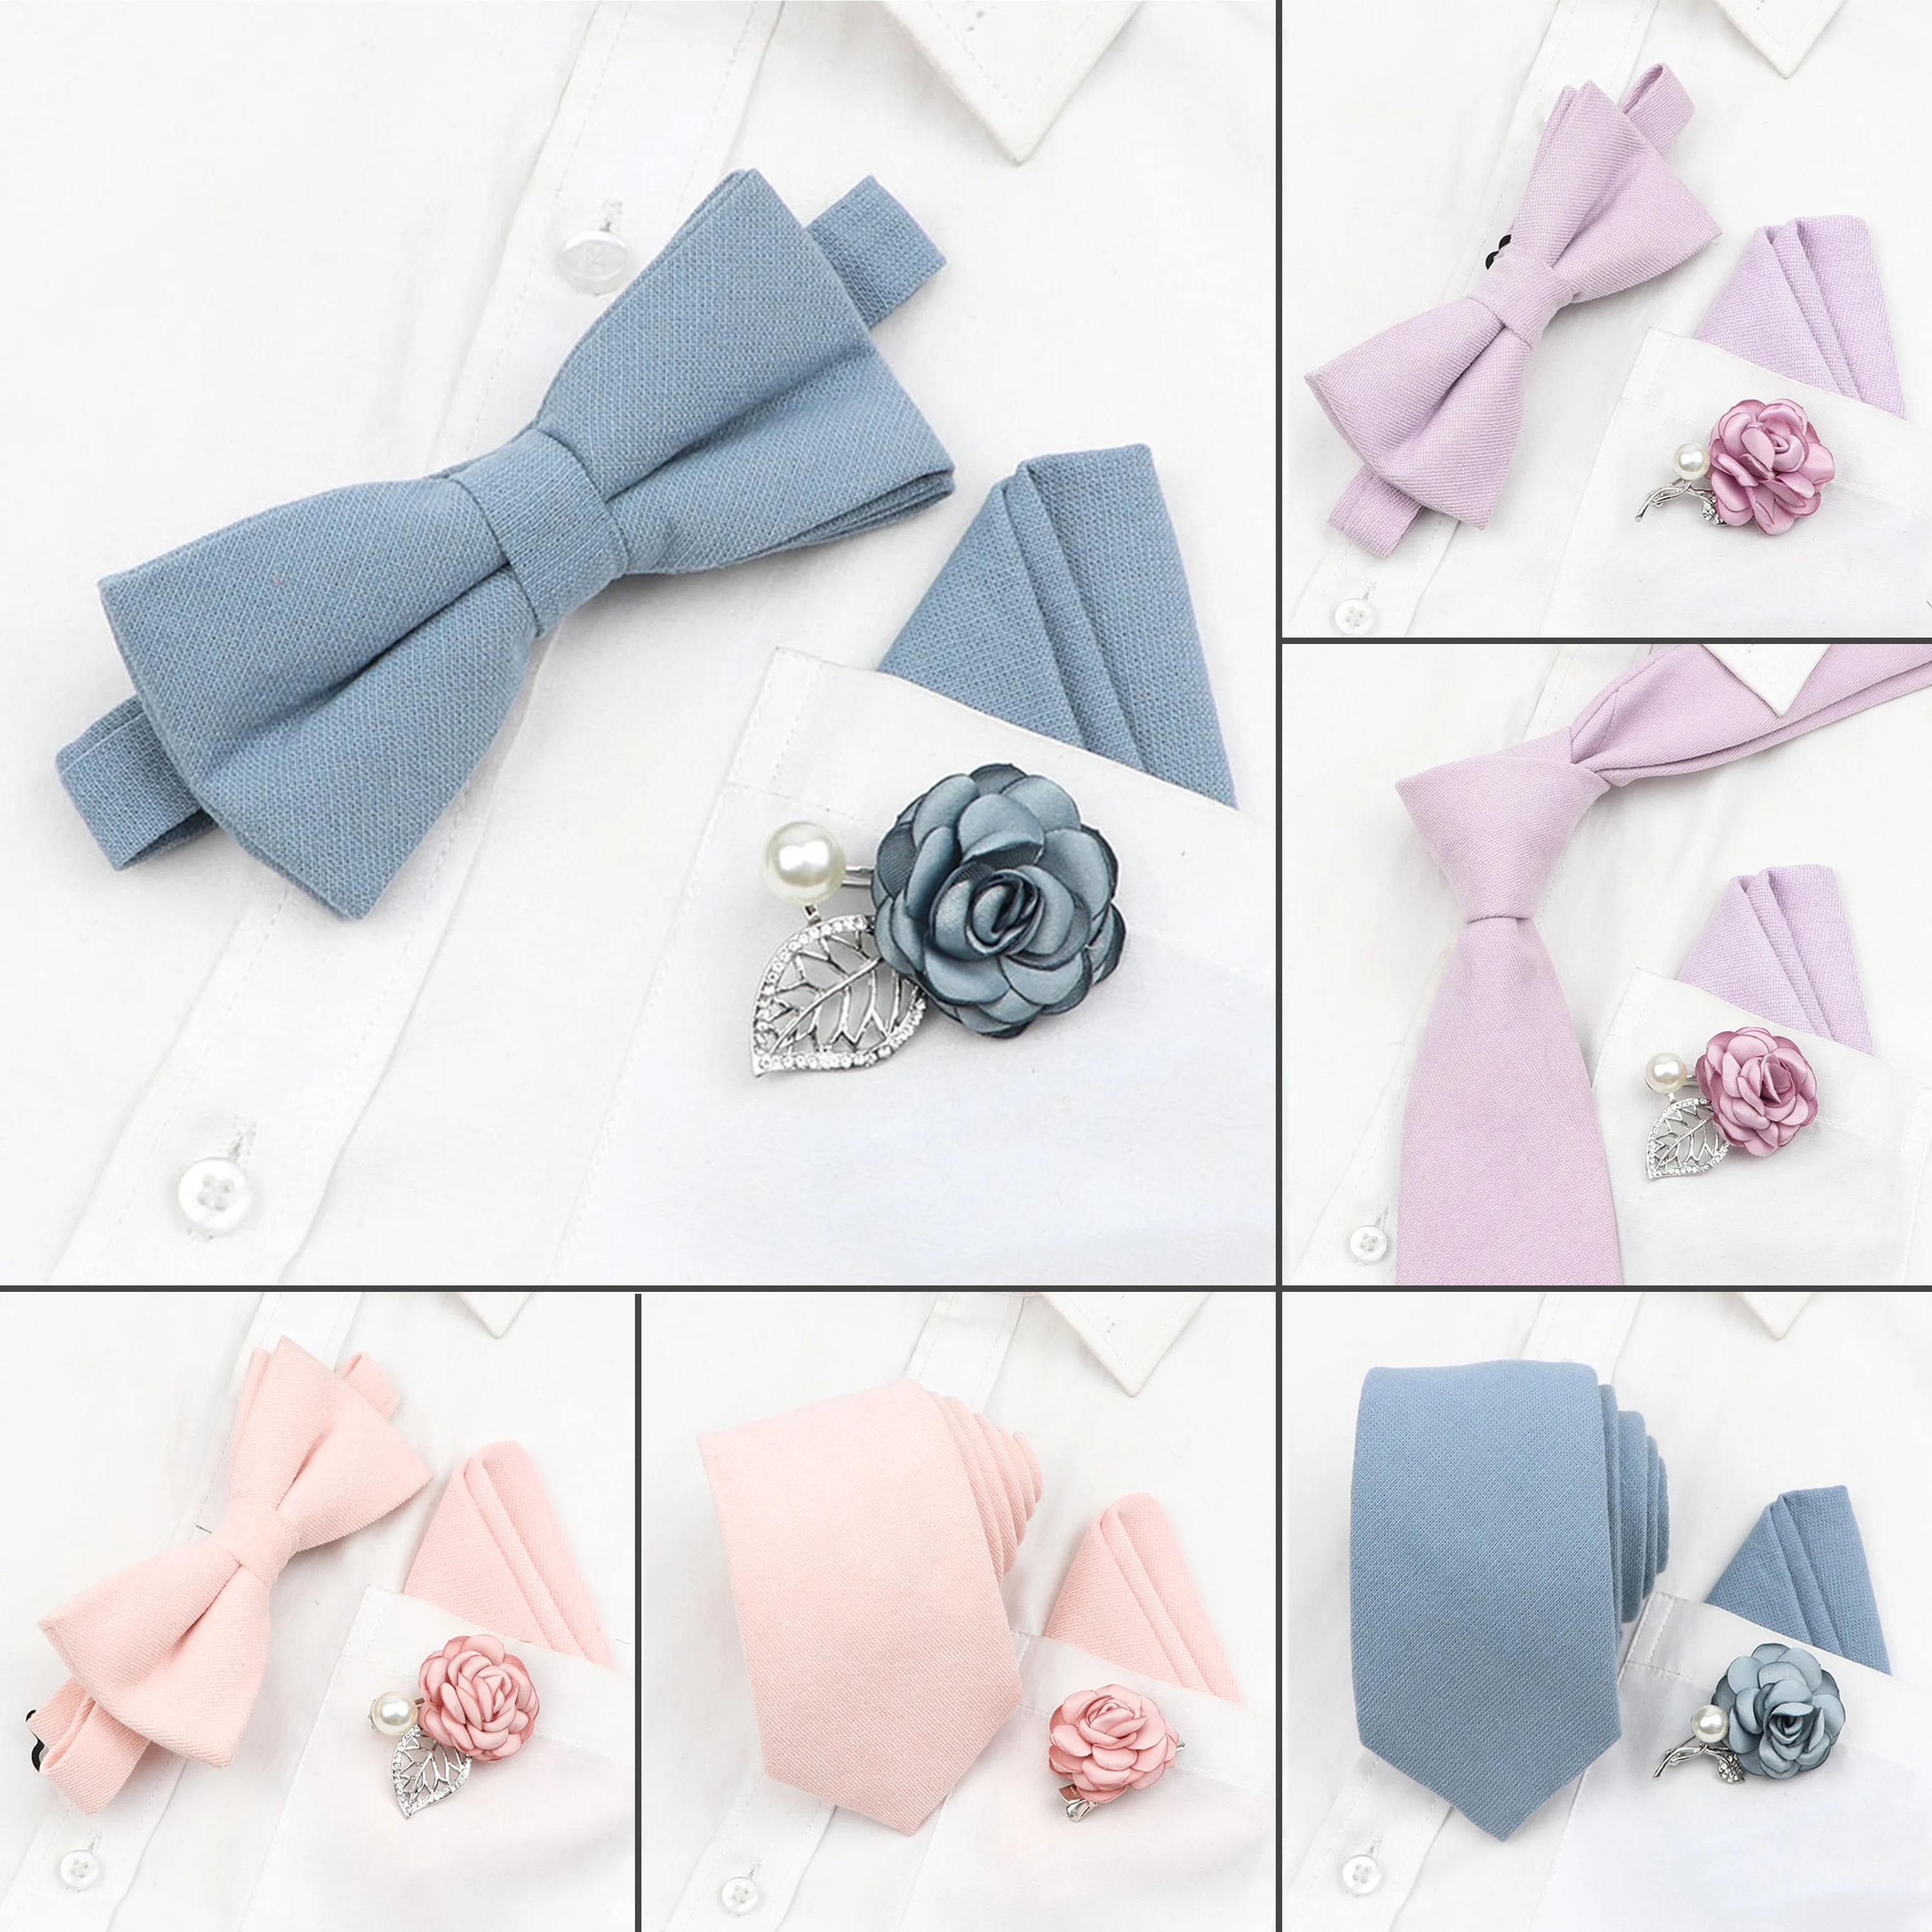 Beautiful Tie Bowtie Set Peach Pink Blue Solid Color 7cm Cotton Necktie Cloth Art Fabric Flower Brooch Wedding Groom Hot Gift